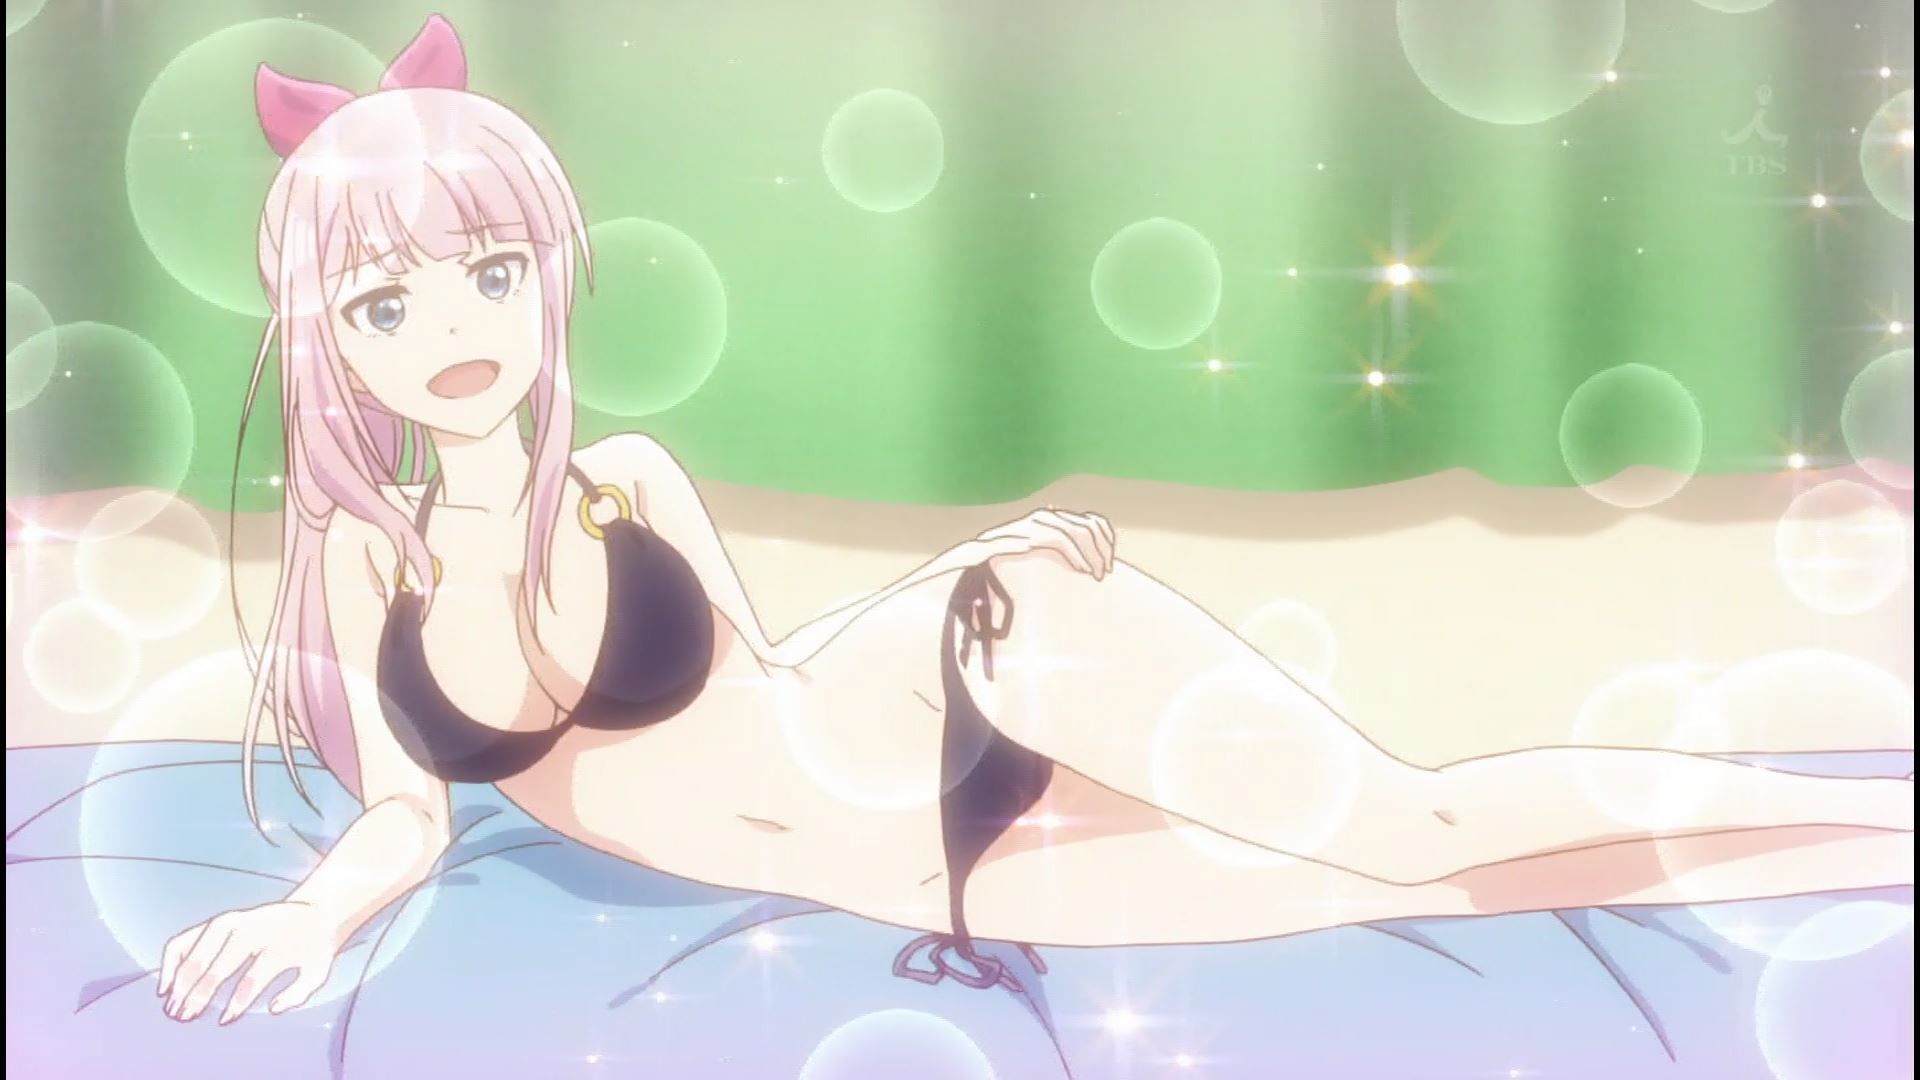 Anime [Kawanagi girl] 8 erotic swimsuit scene of erotic breasts of girls in the story! 3